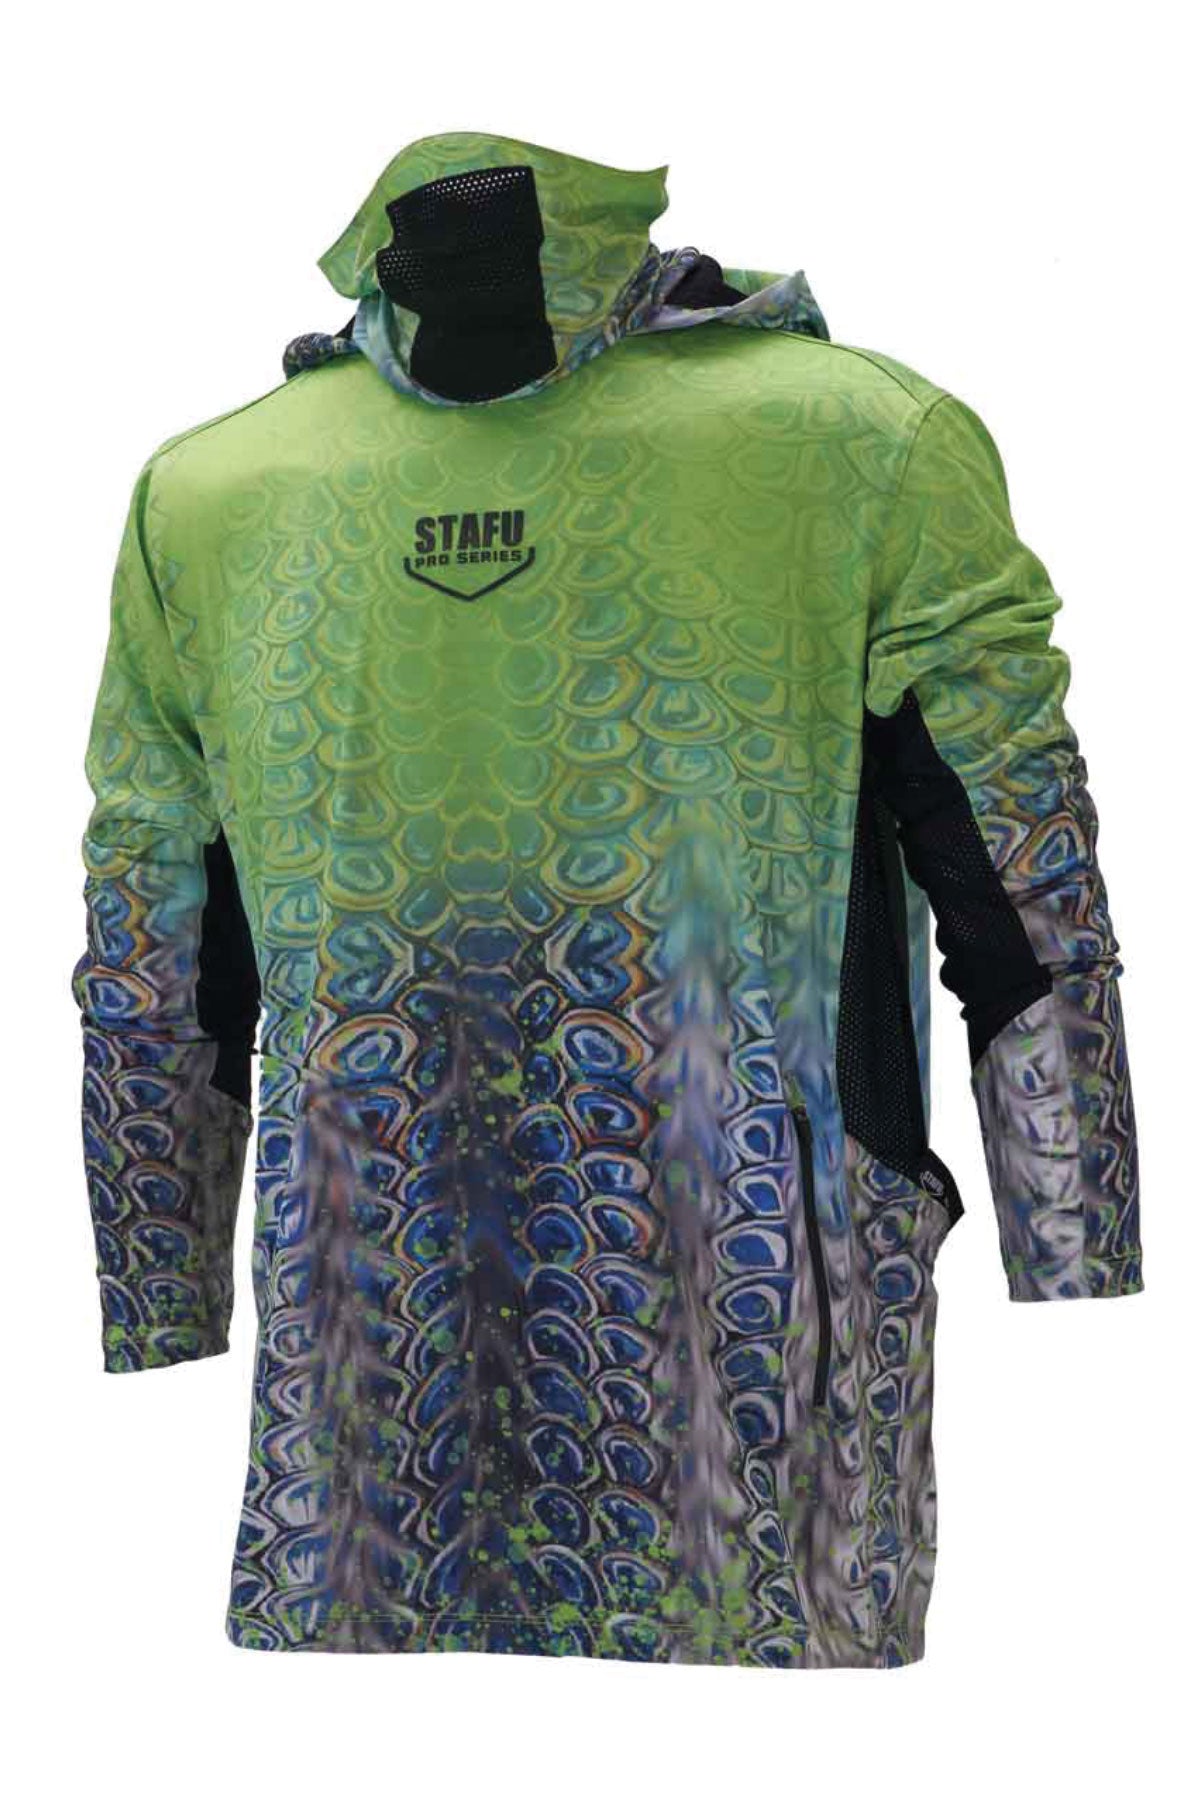 Argonaut Hooded Fishing Shirt - Arapaima - Stafu Pro Series